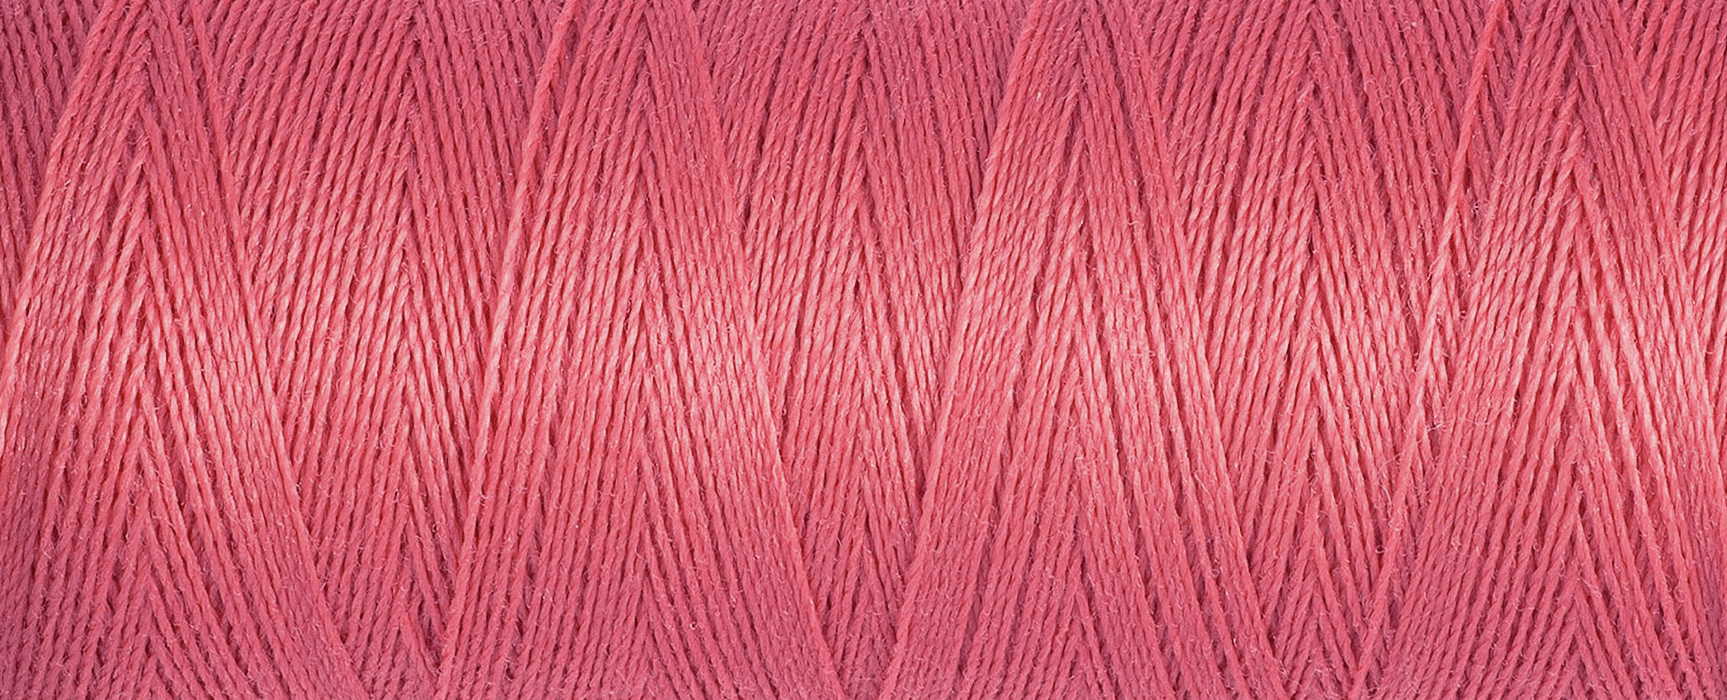 Gutermann Sew-All Thread - 100M (926)-Thread-Jelly Fabrics